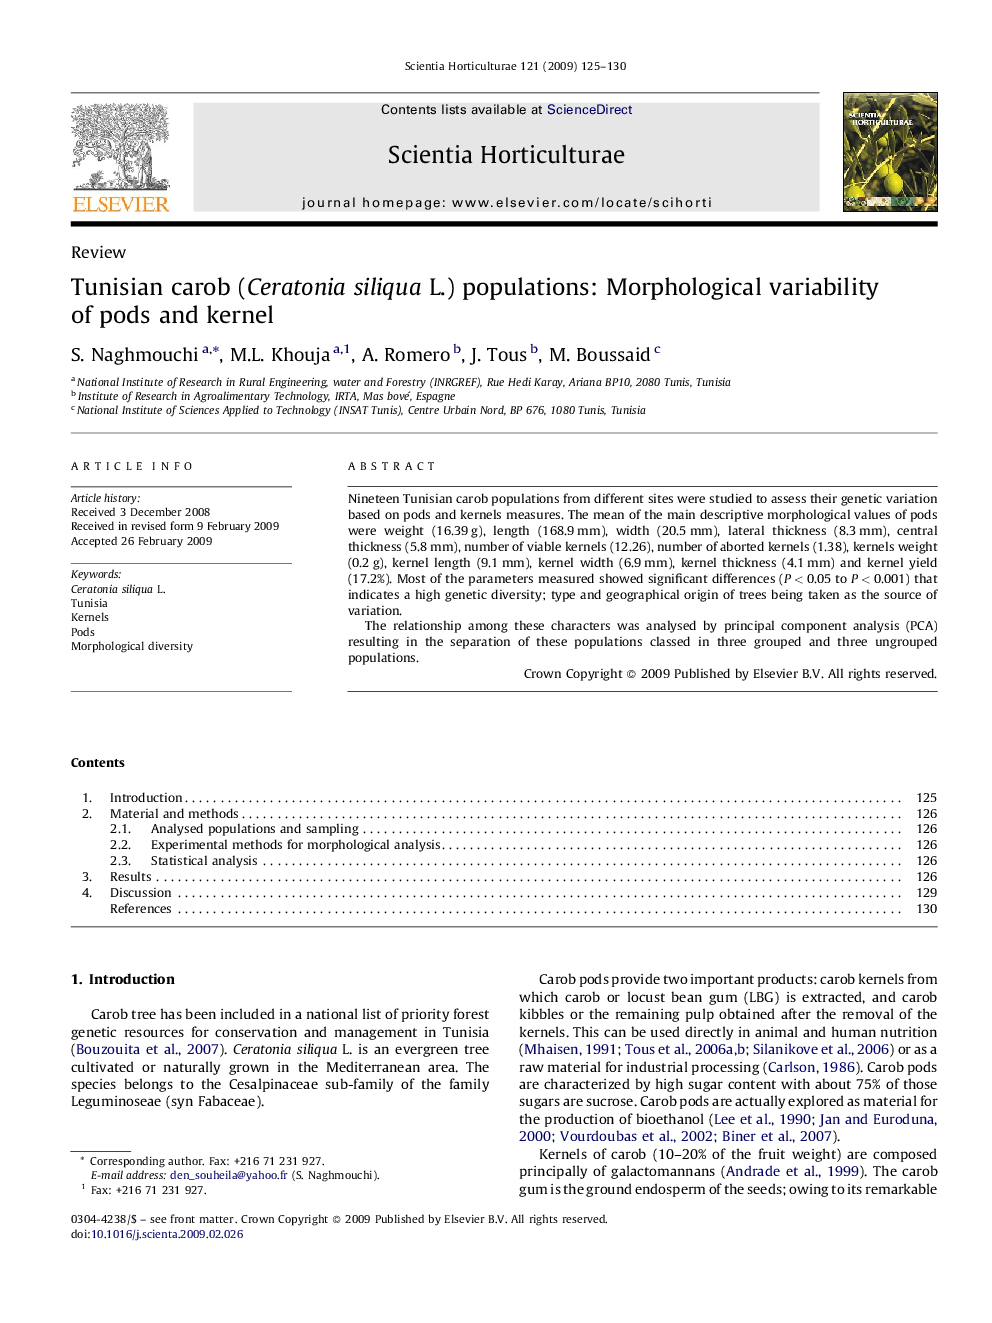 Tunisian carob (Ceratonia siliqua L.) populations: Morphological variability of pods and kernel